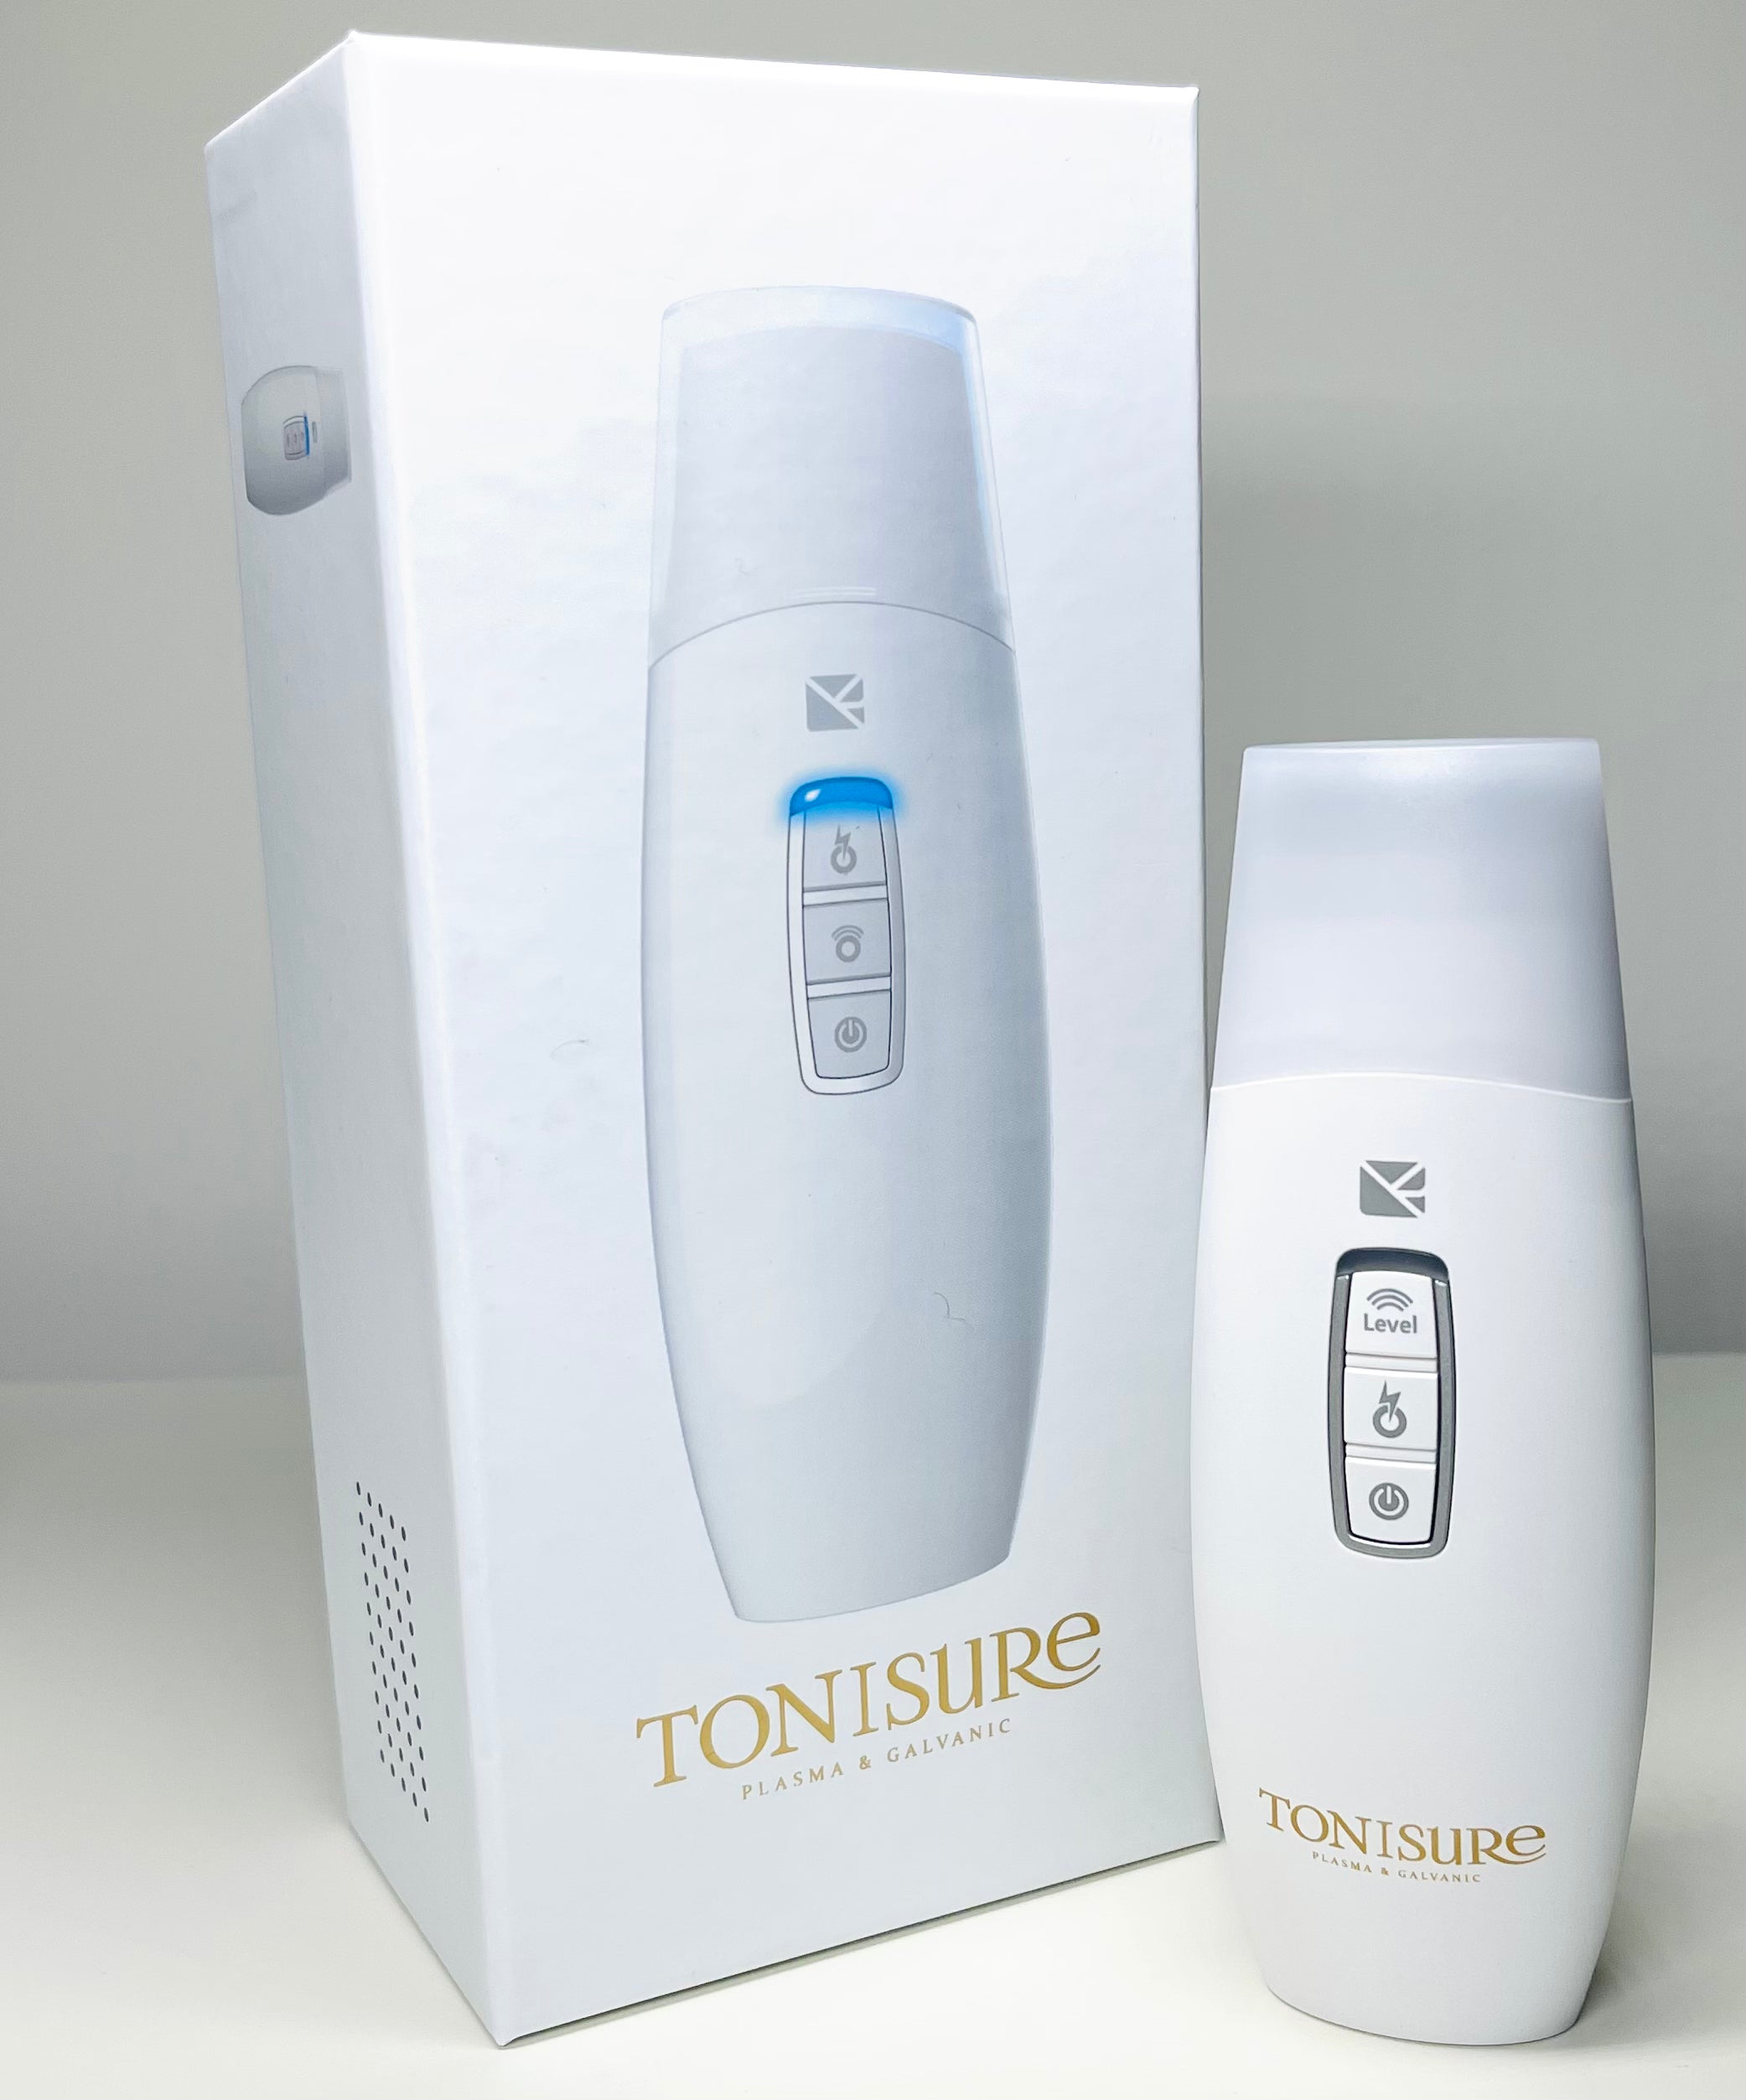 Tonisure Plasma & Galvanic 2 in 1 portable skin care device